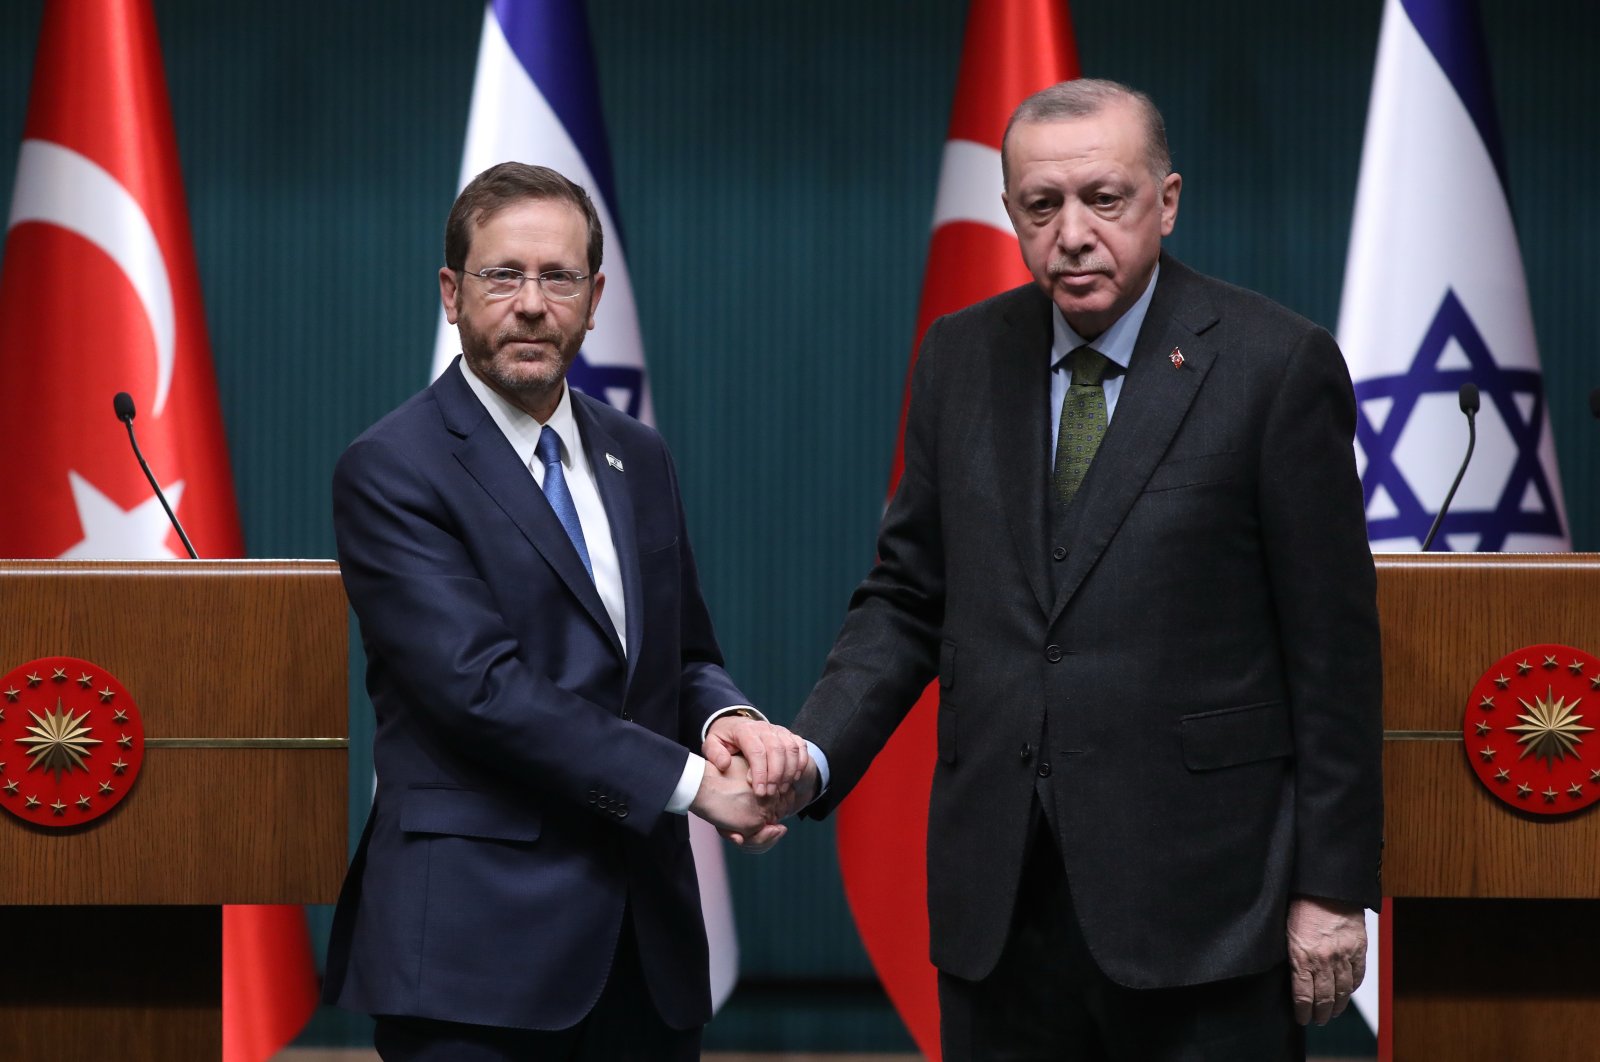 Israeli President Isaac Herzog (L) and Turkish President Recep Tayyip Erdoğan (R) attend a press conference after their meeting in Ankara, Turkey, March 9, 2022. (EPA Photo)